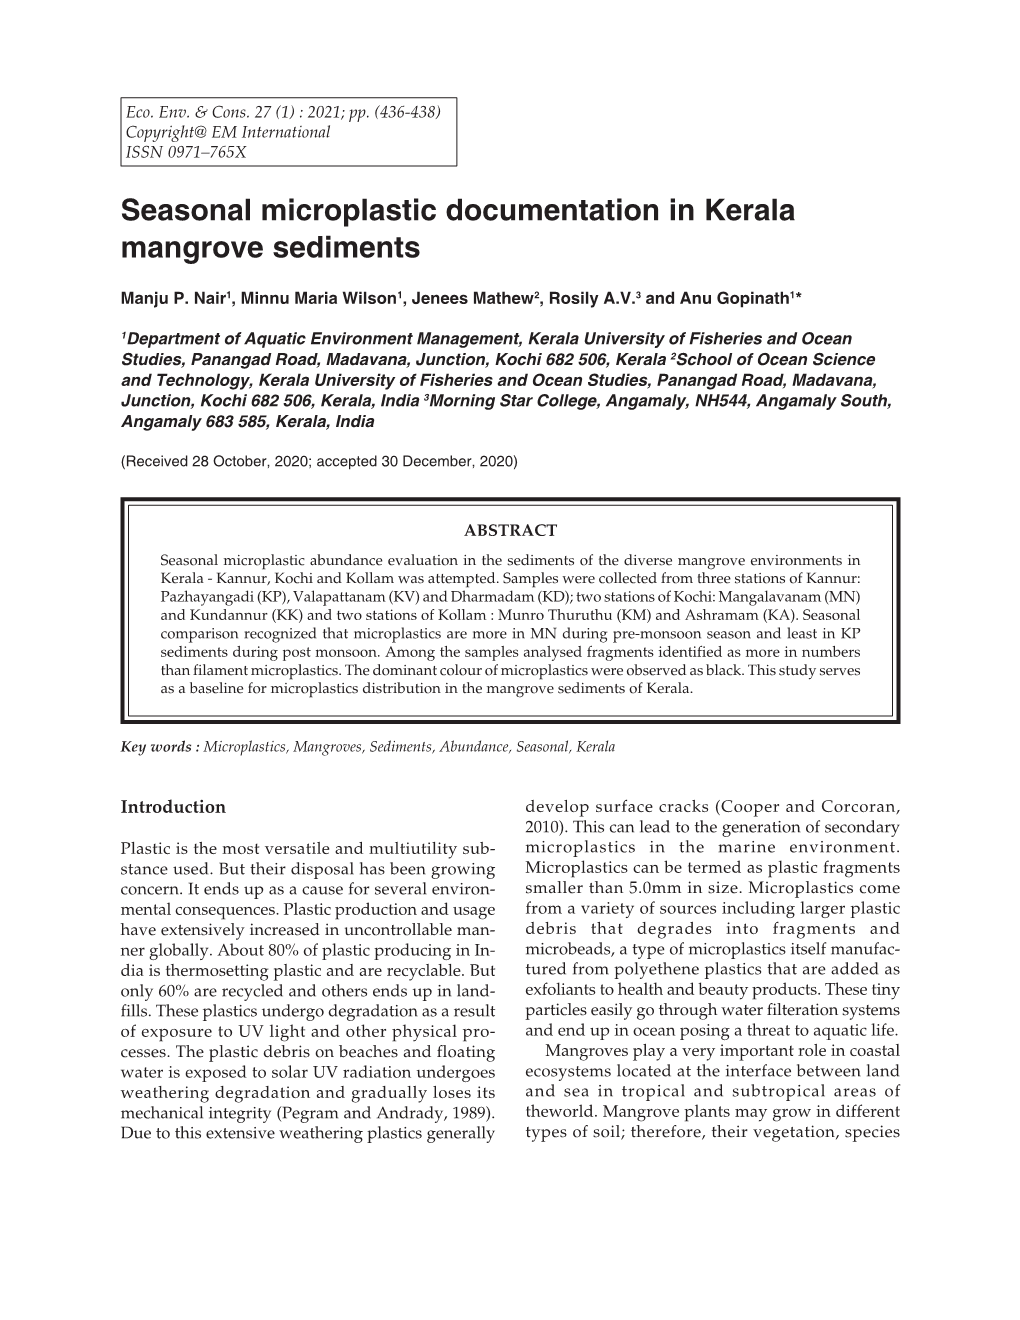 Seasonal Microplastic Documentation in Kerala Mangrove Sediments